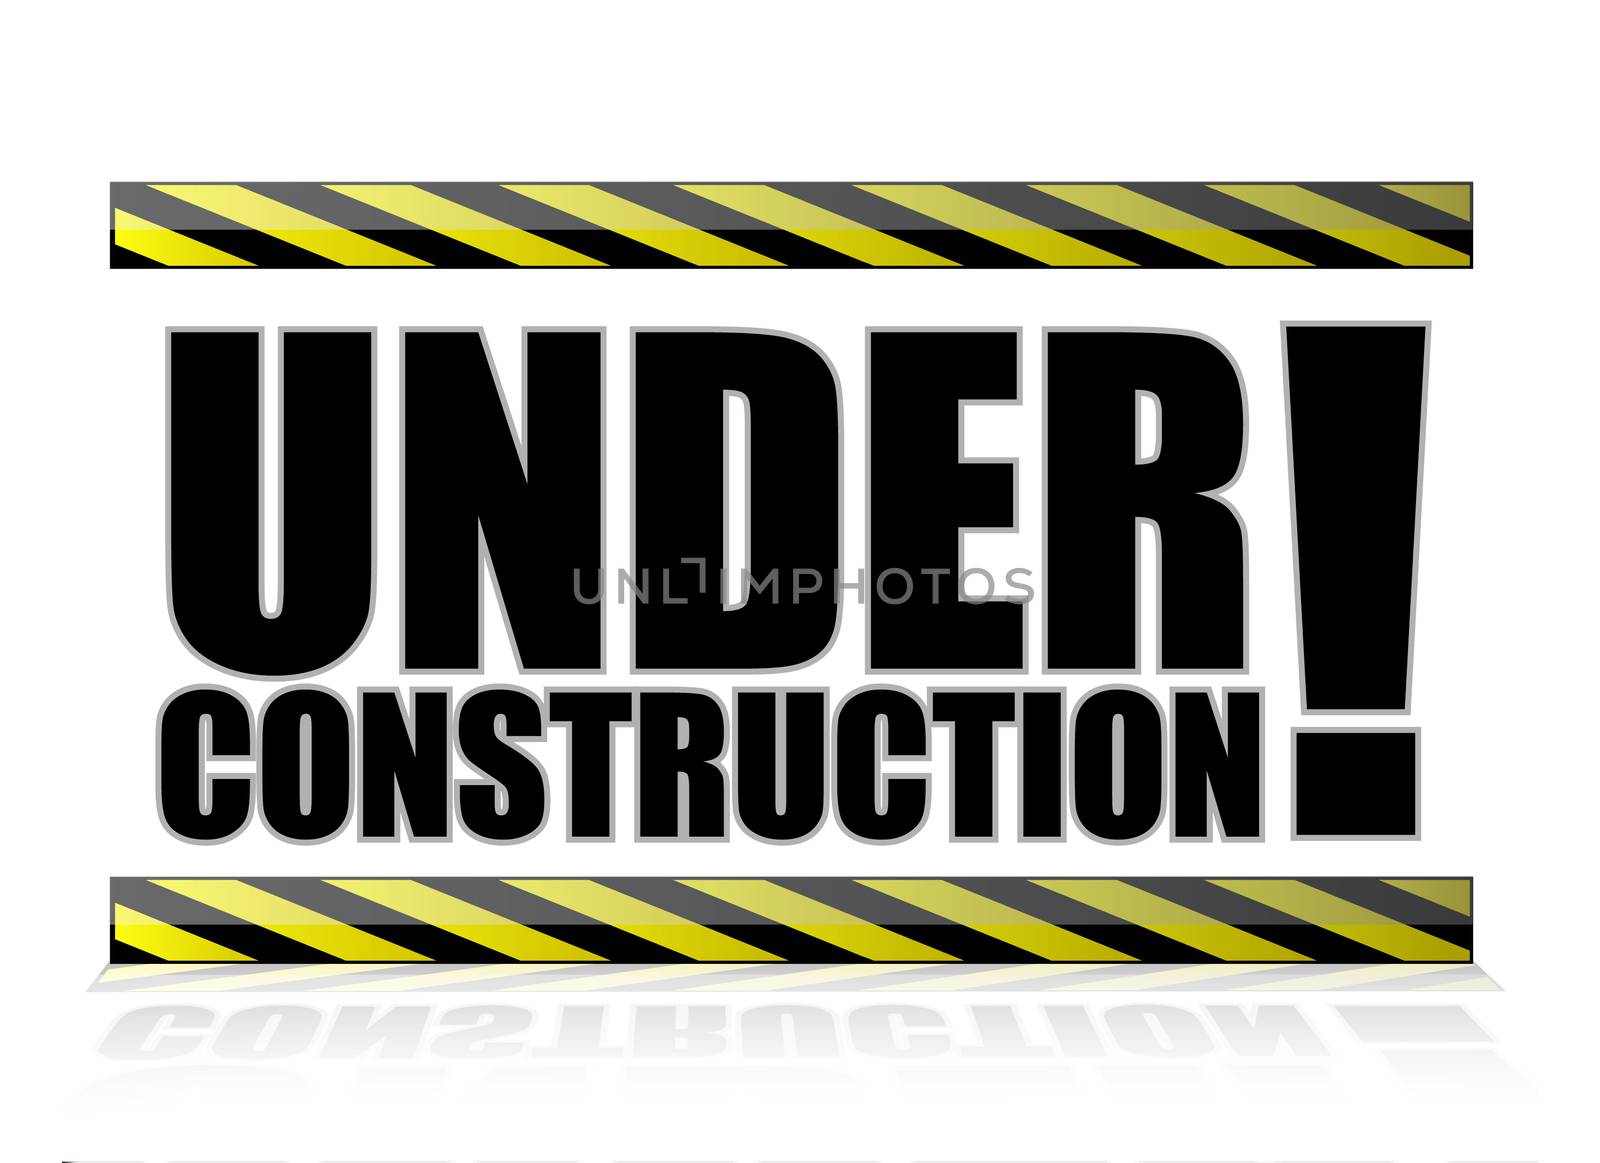 Web under construction illustration sign